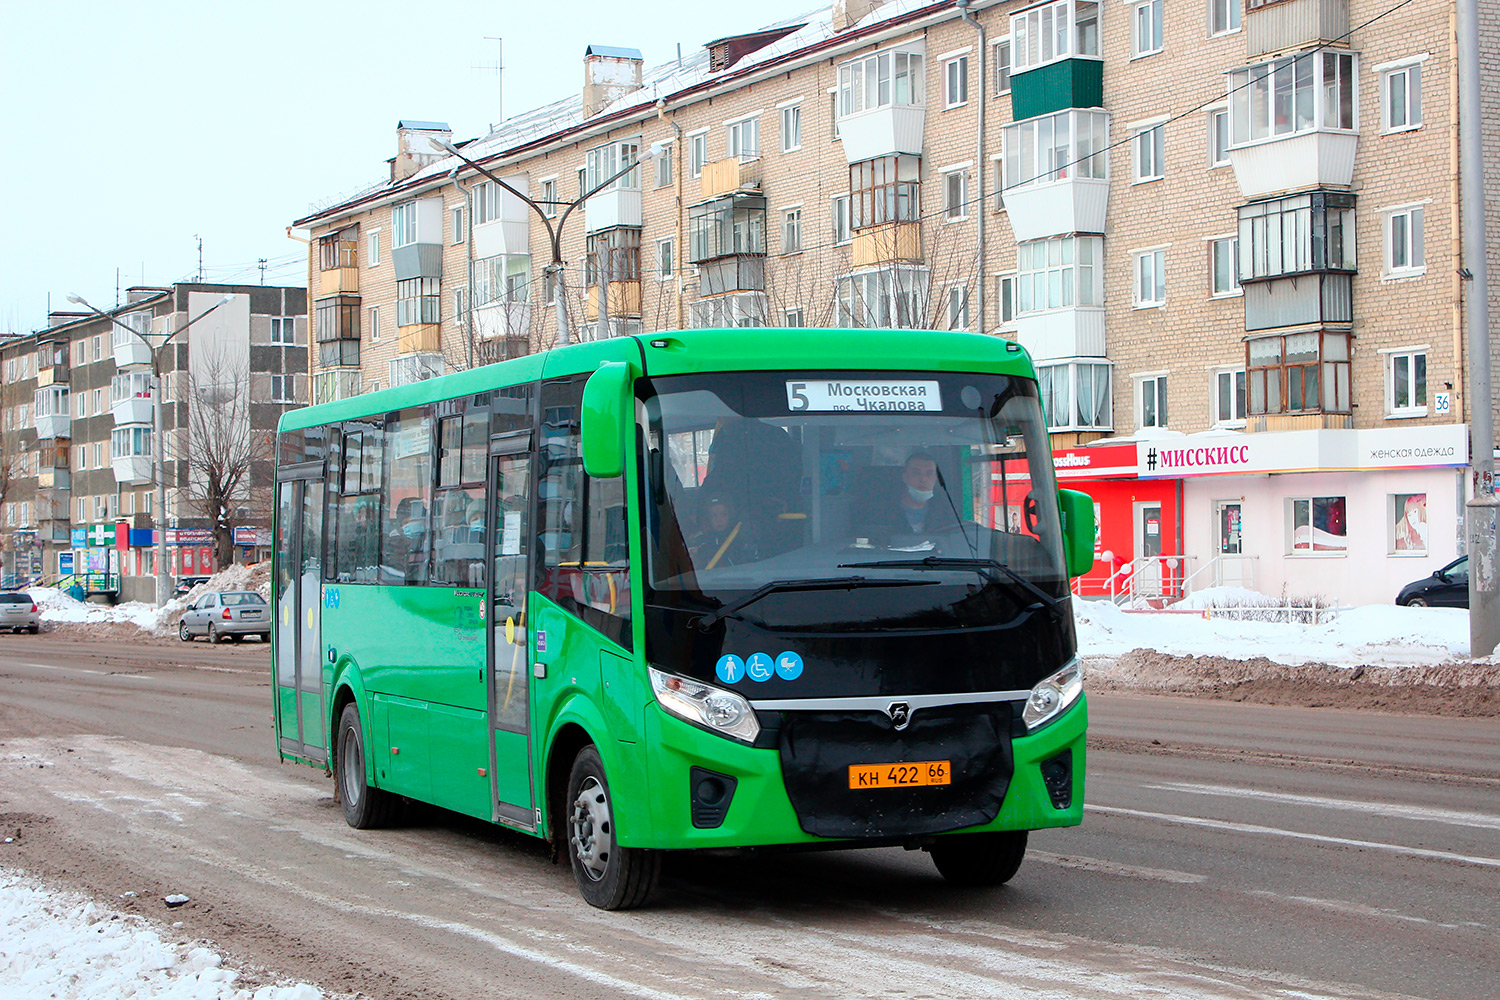 Kamensk-Ural'skiy, ПАЗ-320415-04 "Vector Next" (FD, FS) # КН 422 66